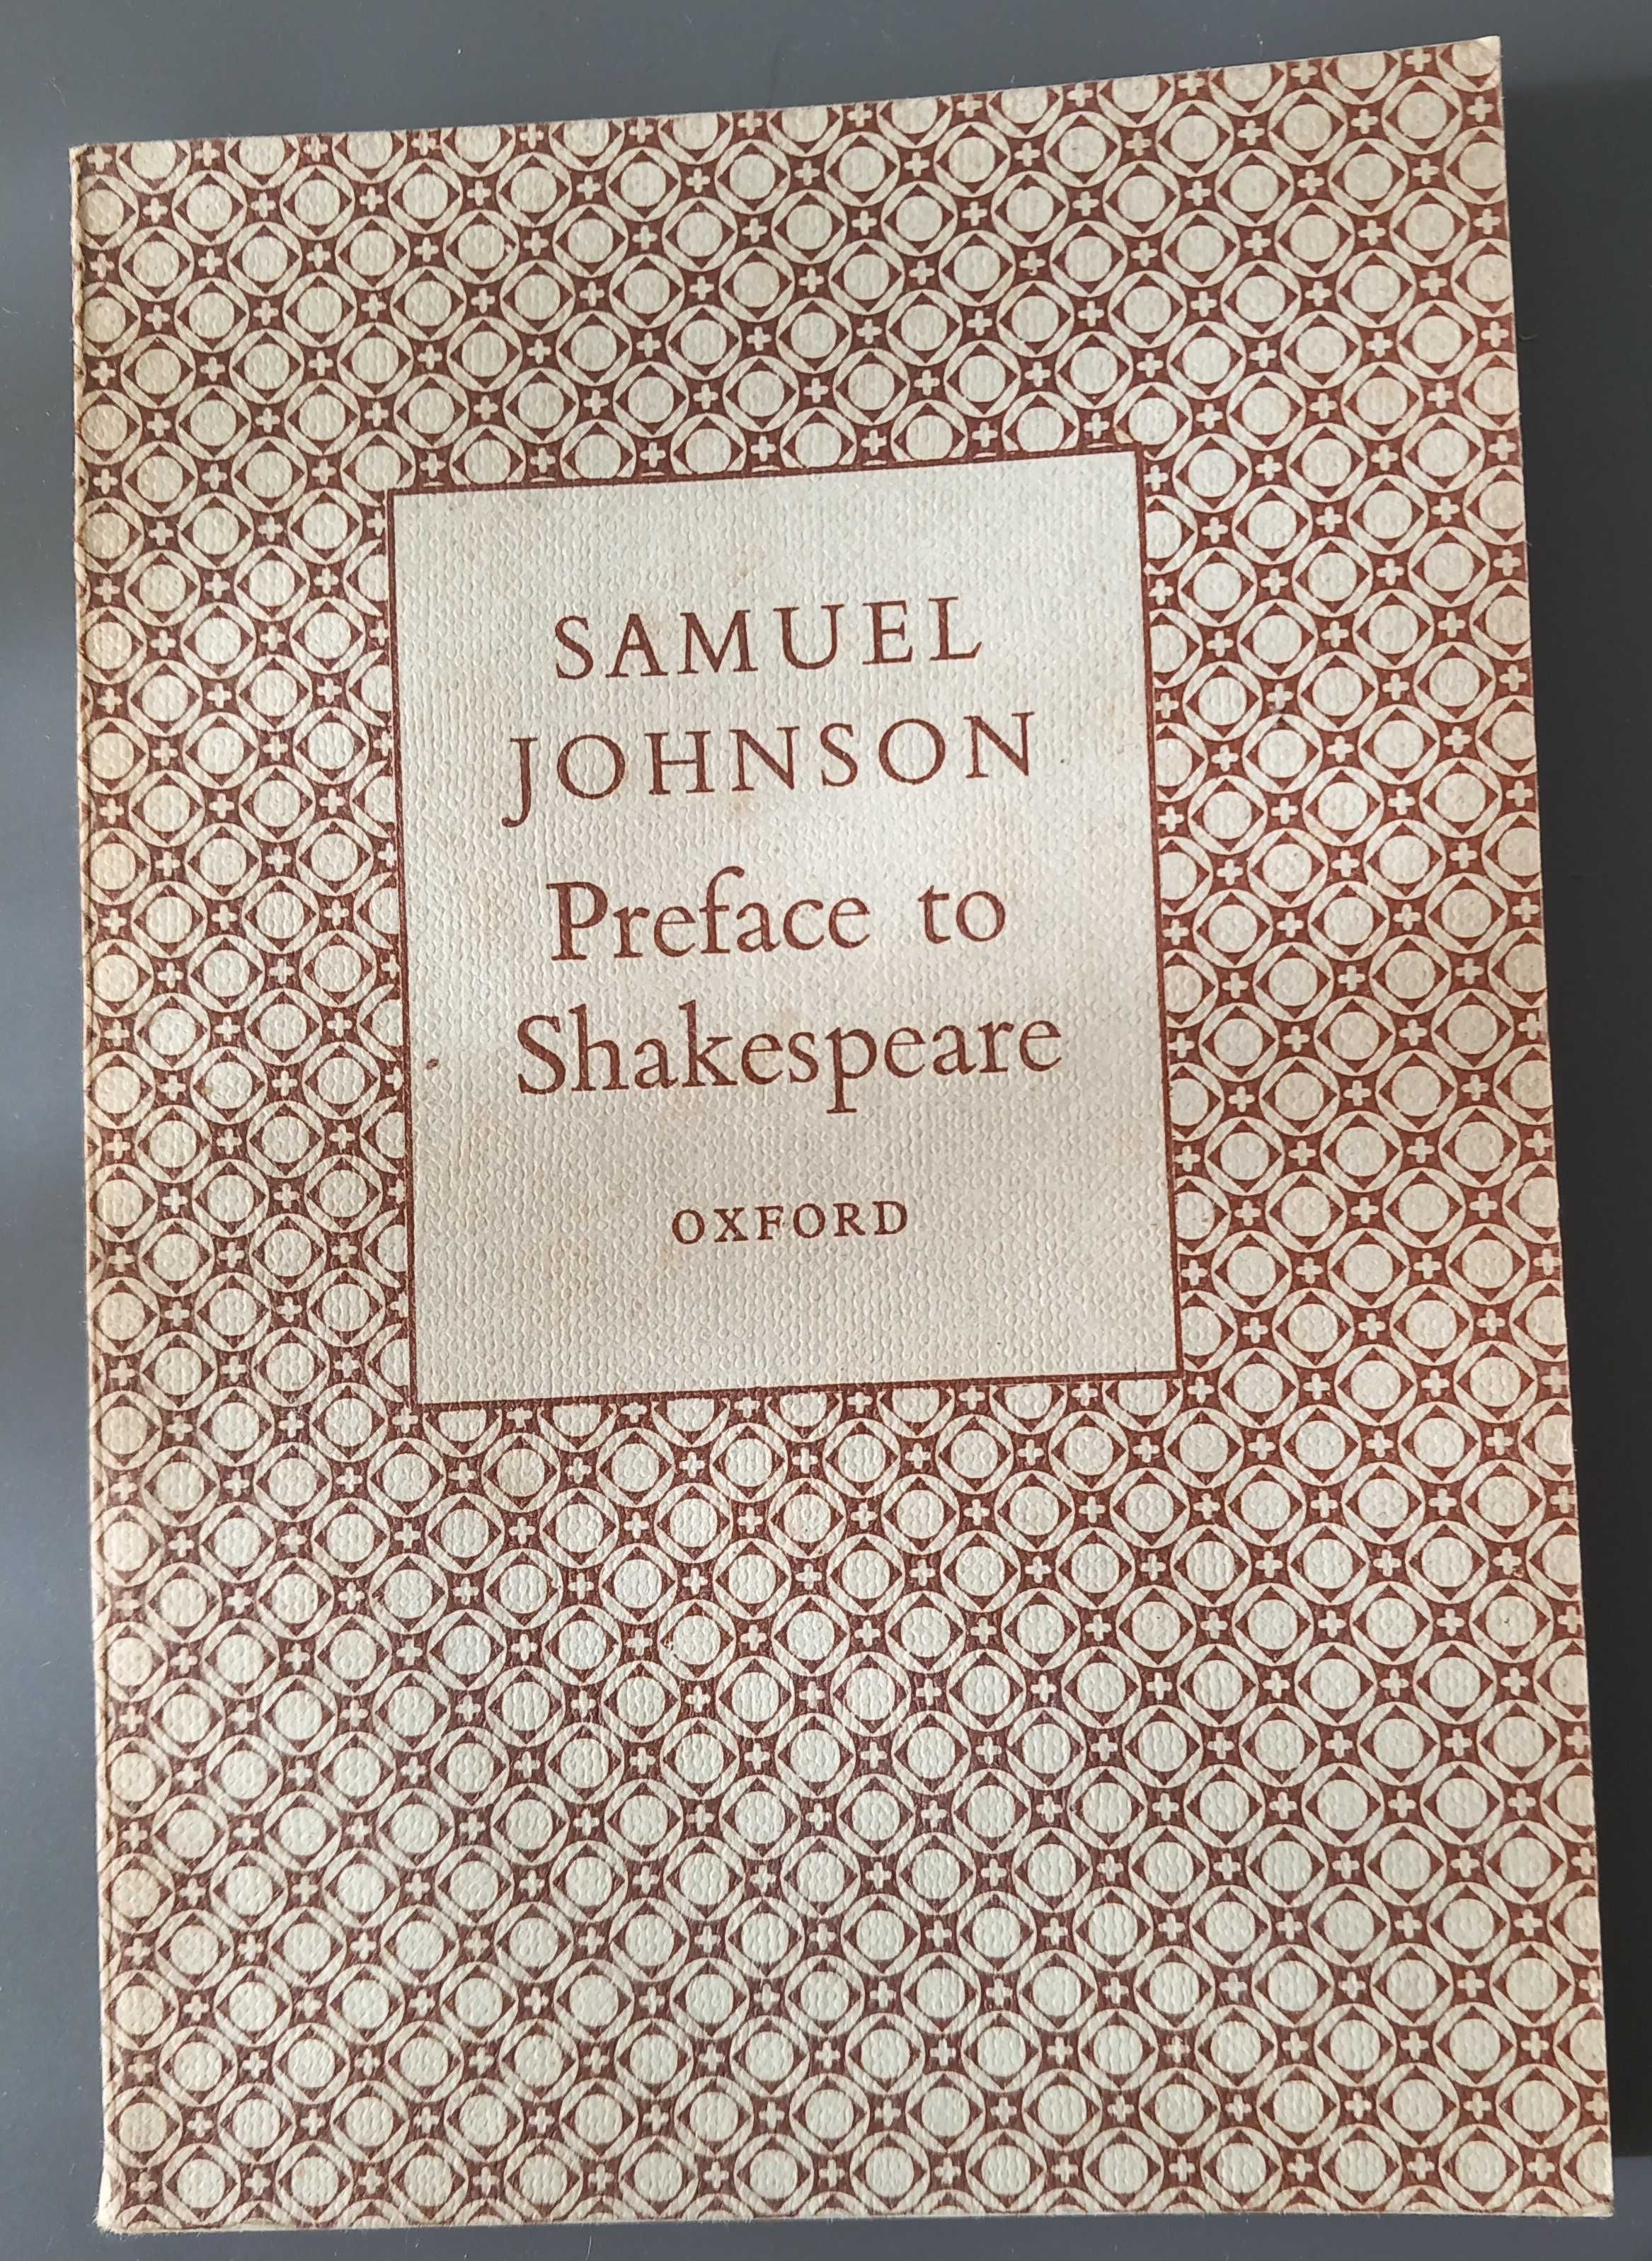 Samuel Johnson- Preface to Shakespeare (Oxford University Press; 1966)